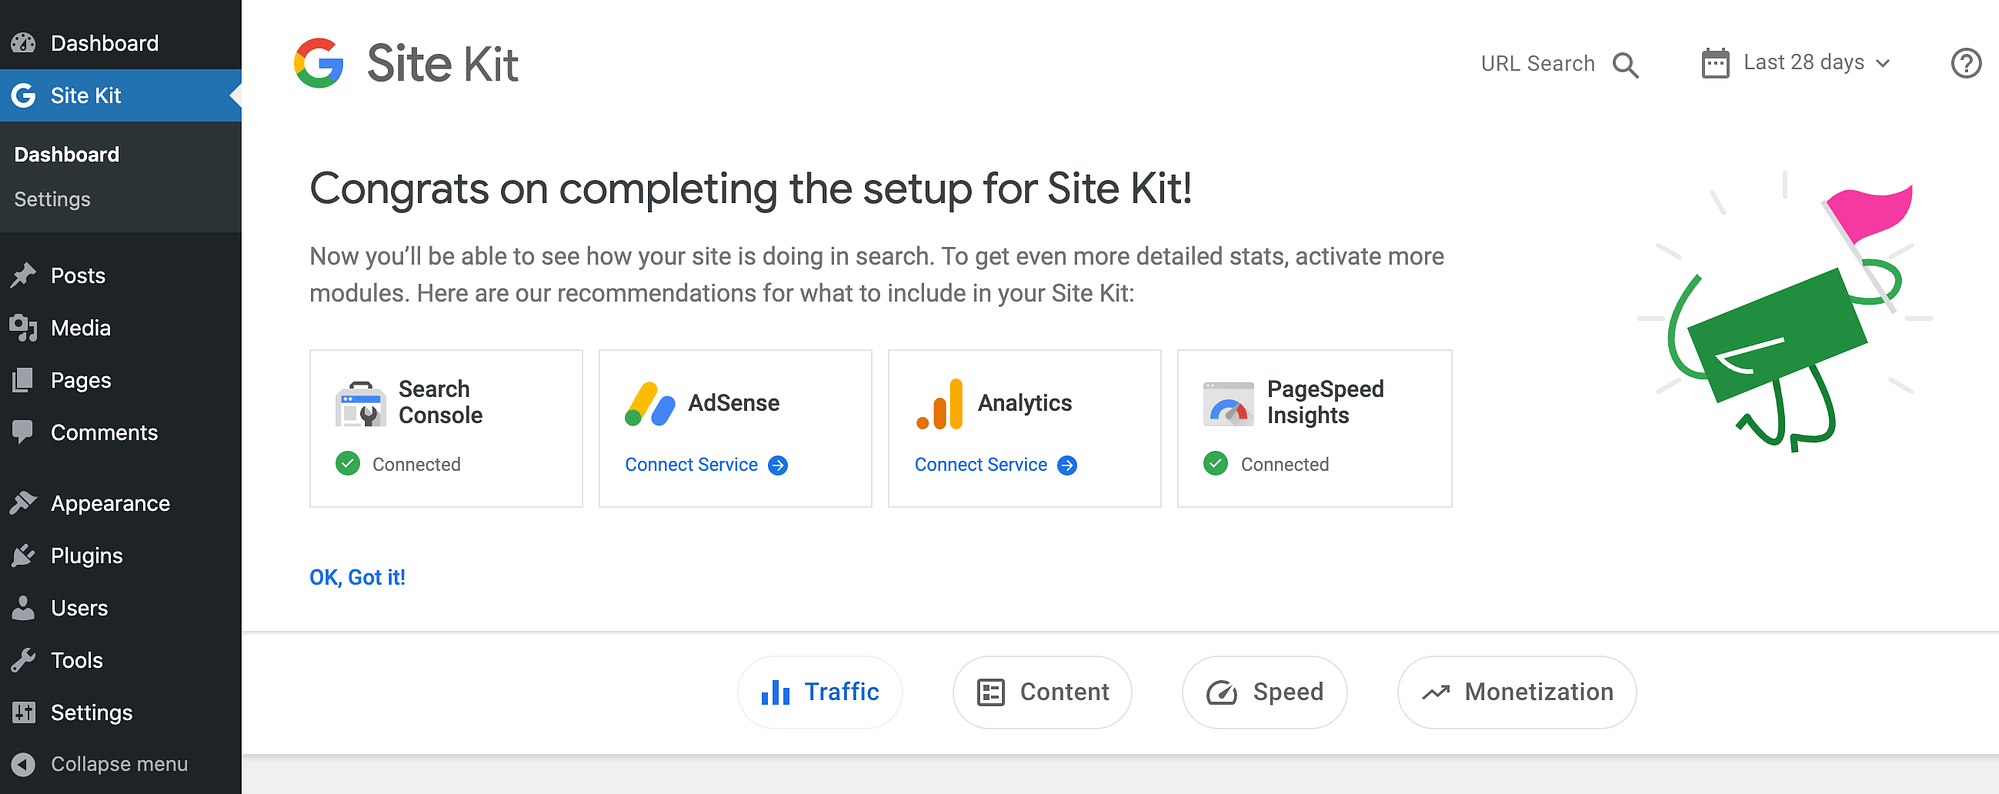 The Google Site Kit dashboard.